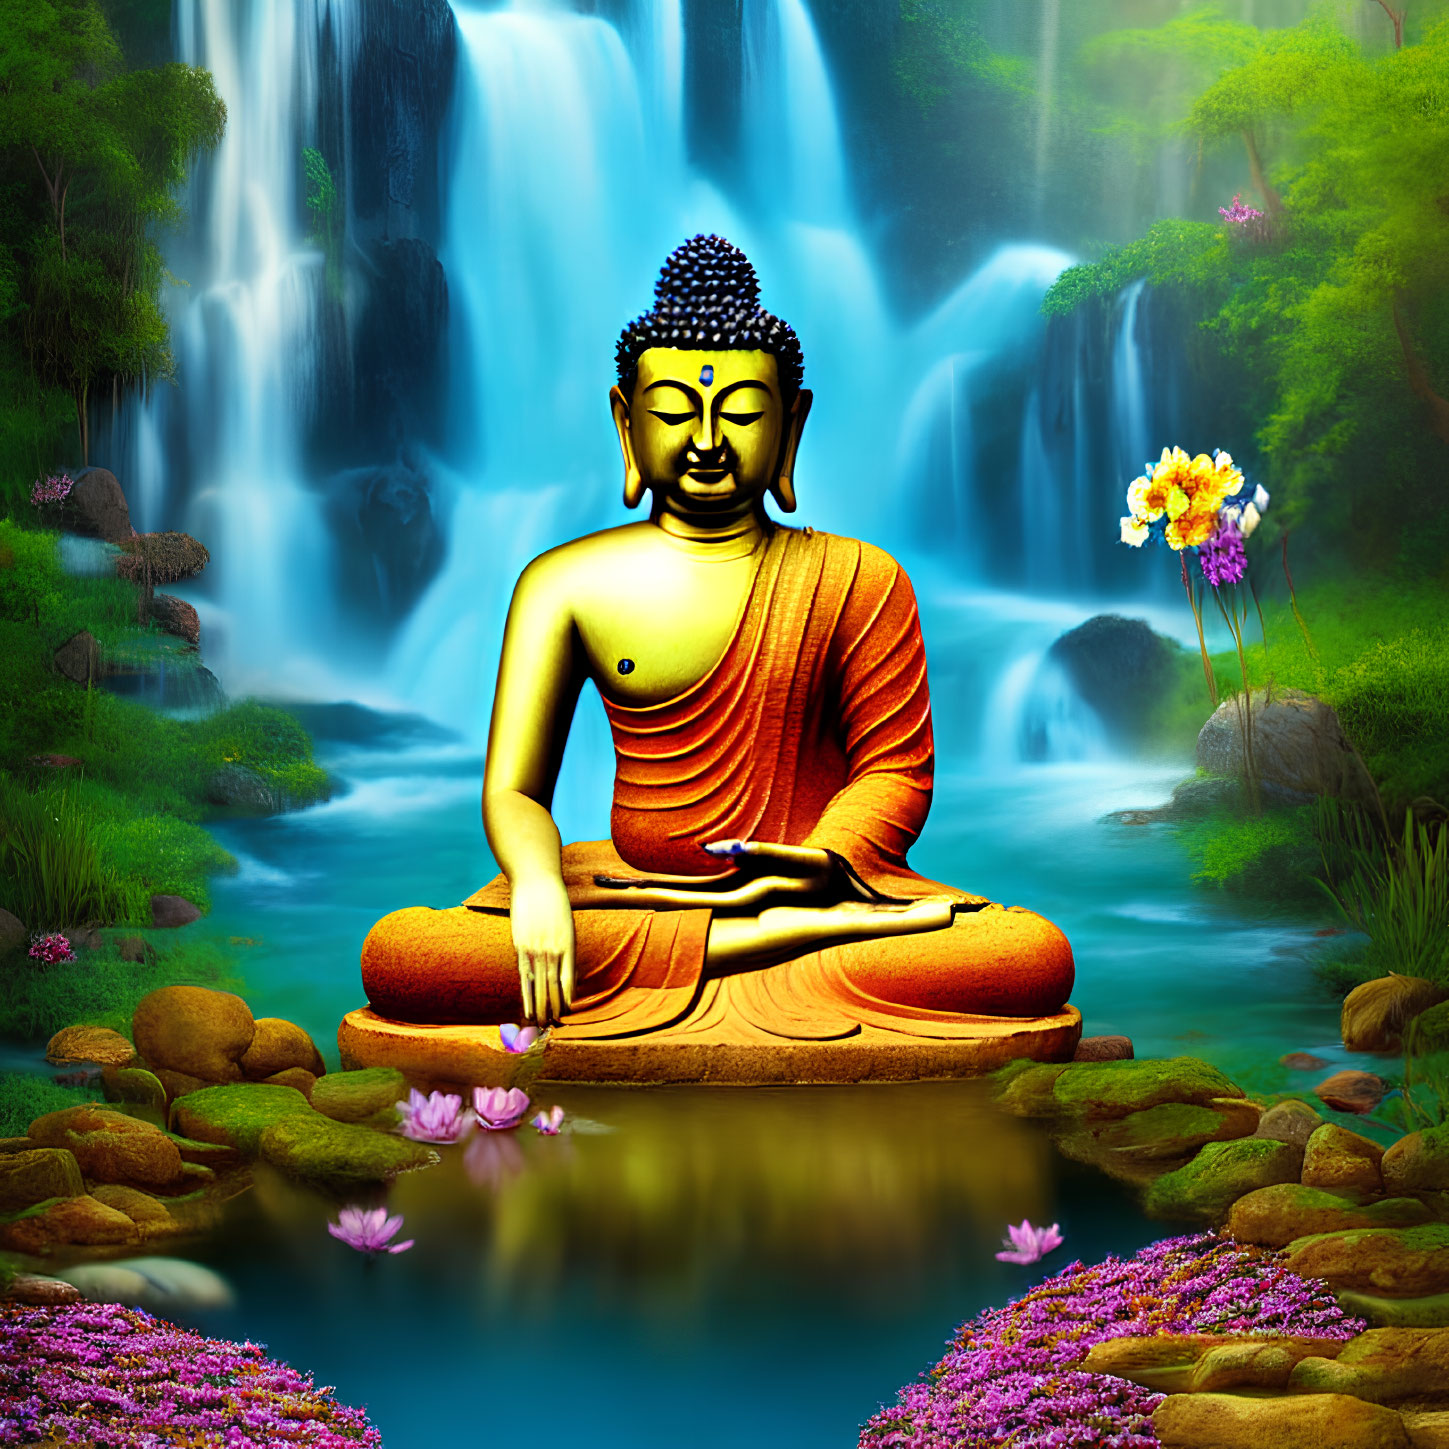 Golden Buddha statue meditating by waterfall in lush greenery